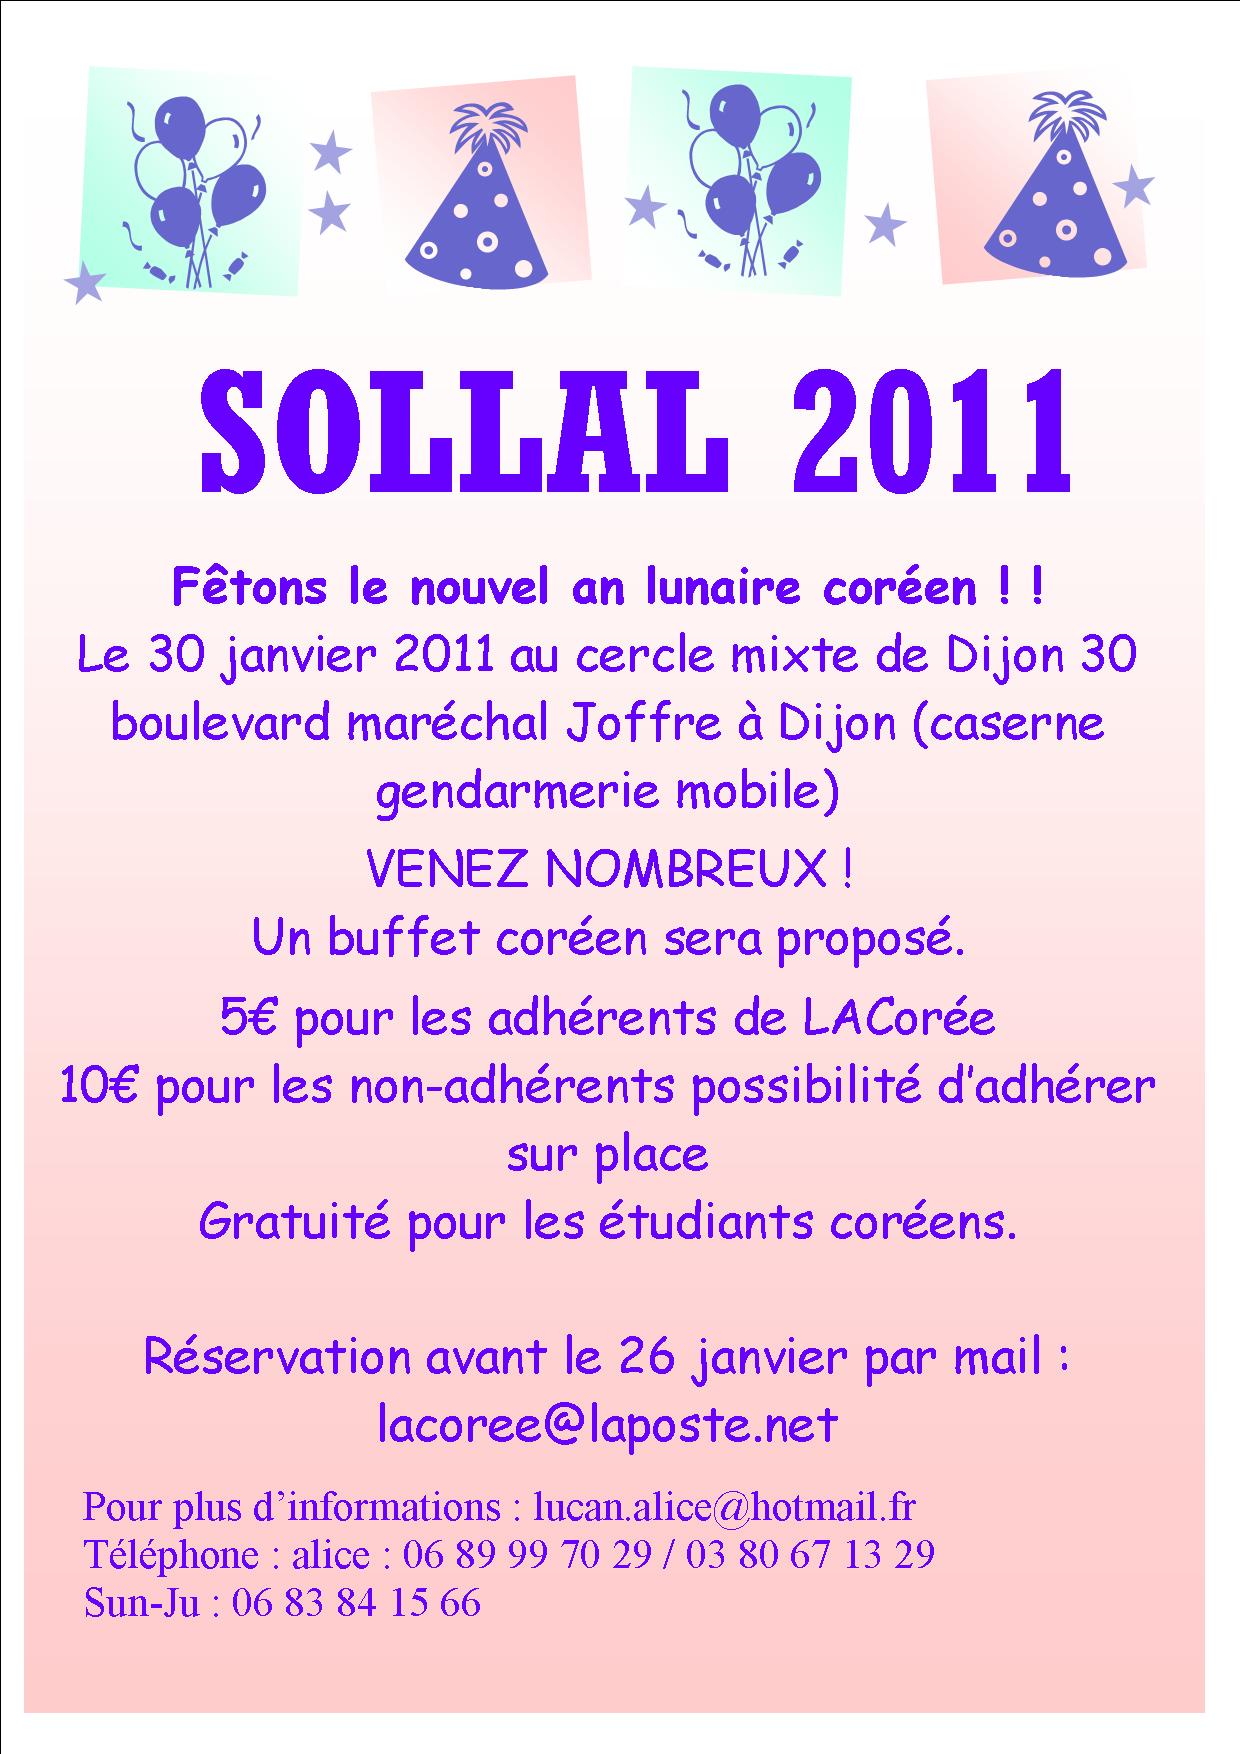 Fête de Sollal 2011